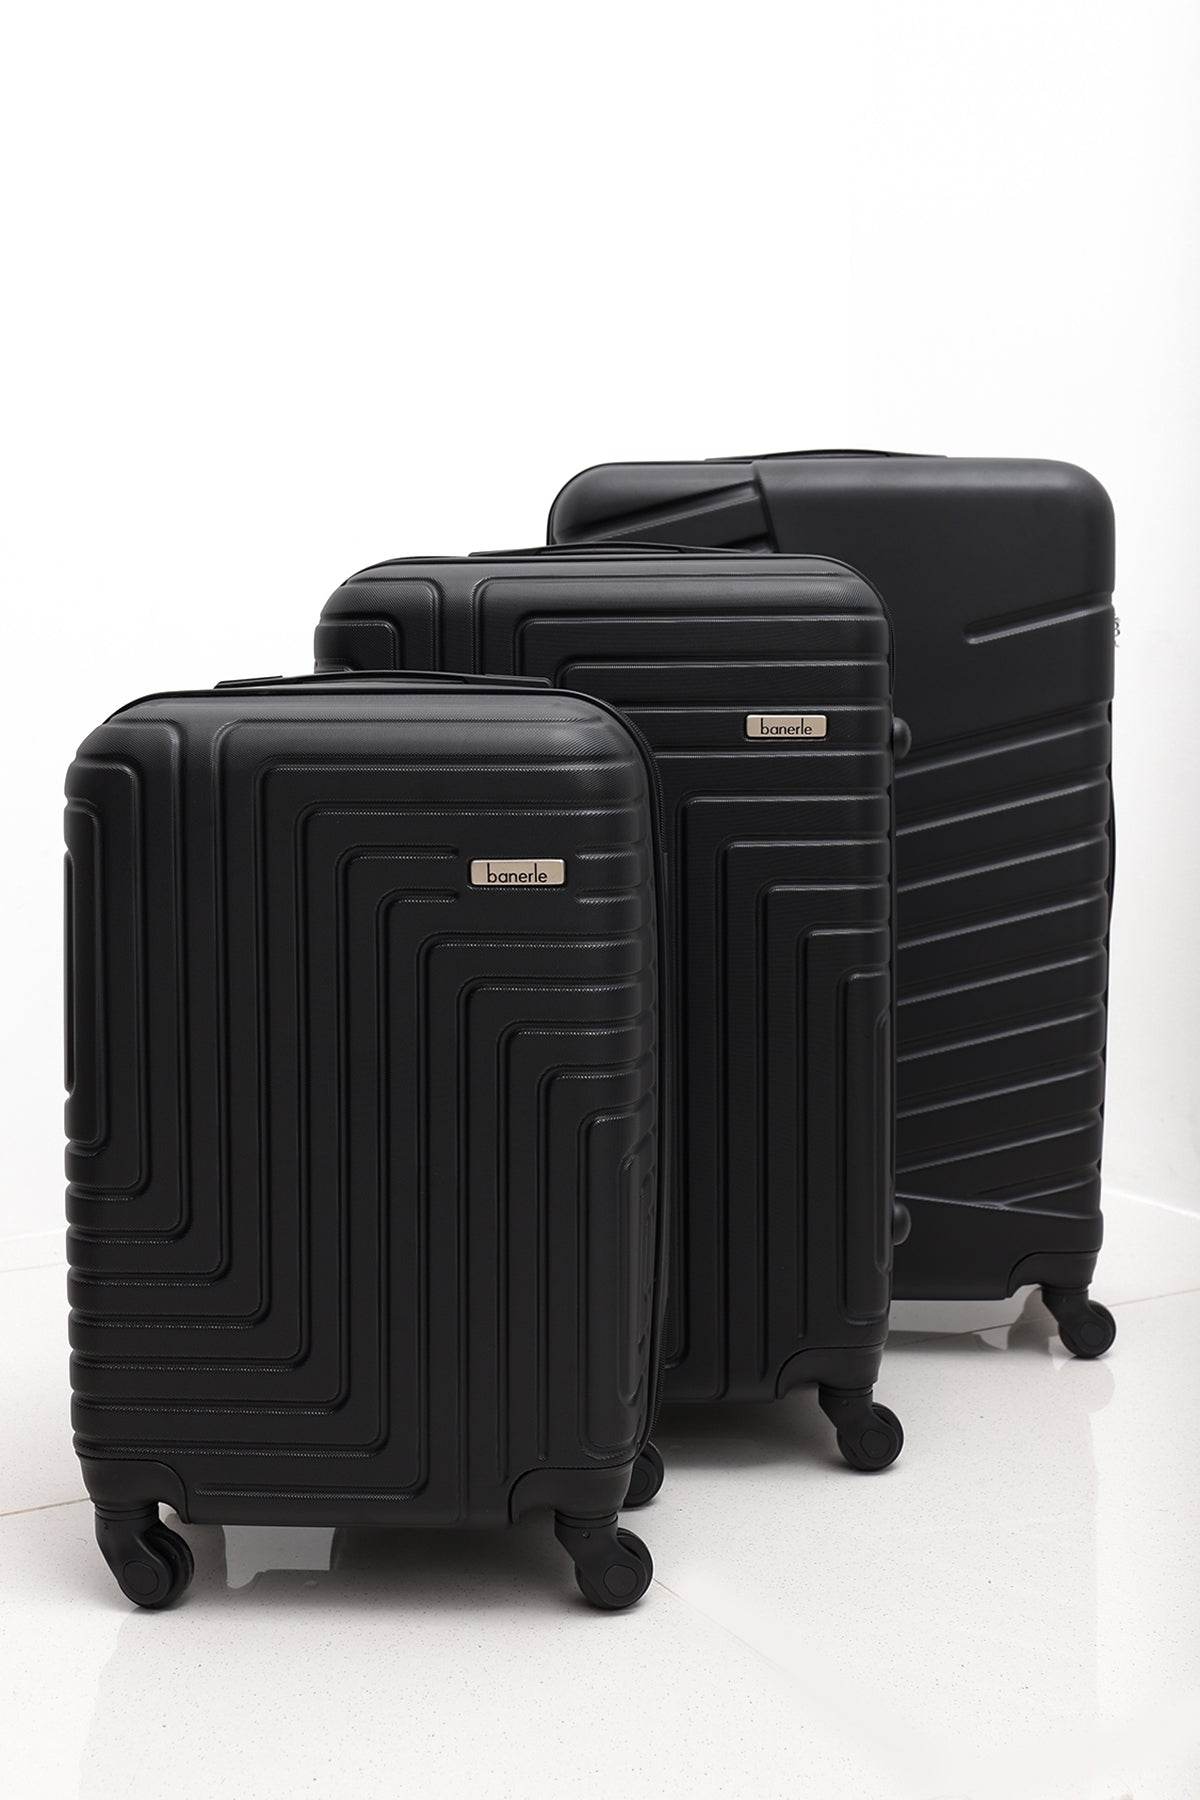 Travel Luggage Bag